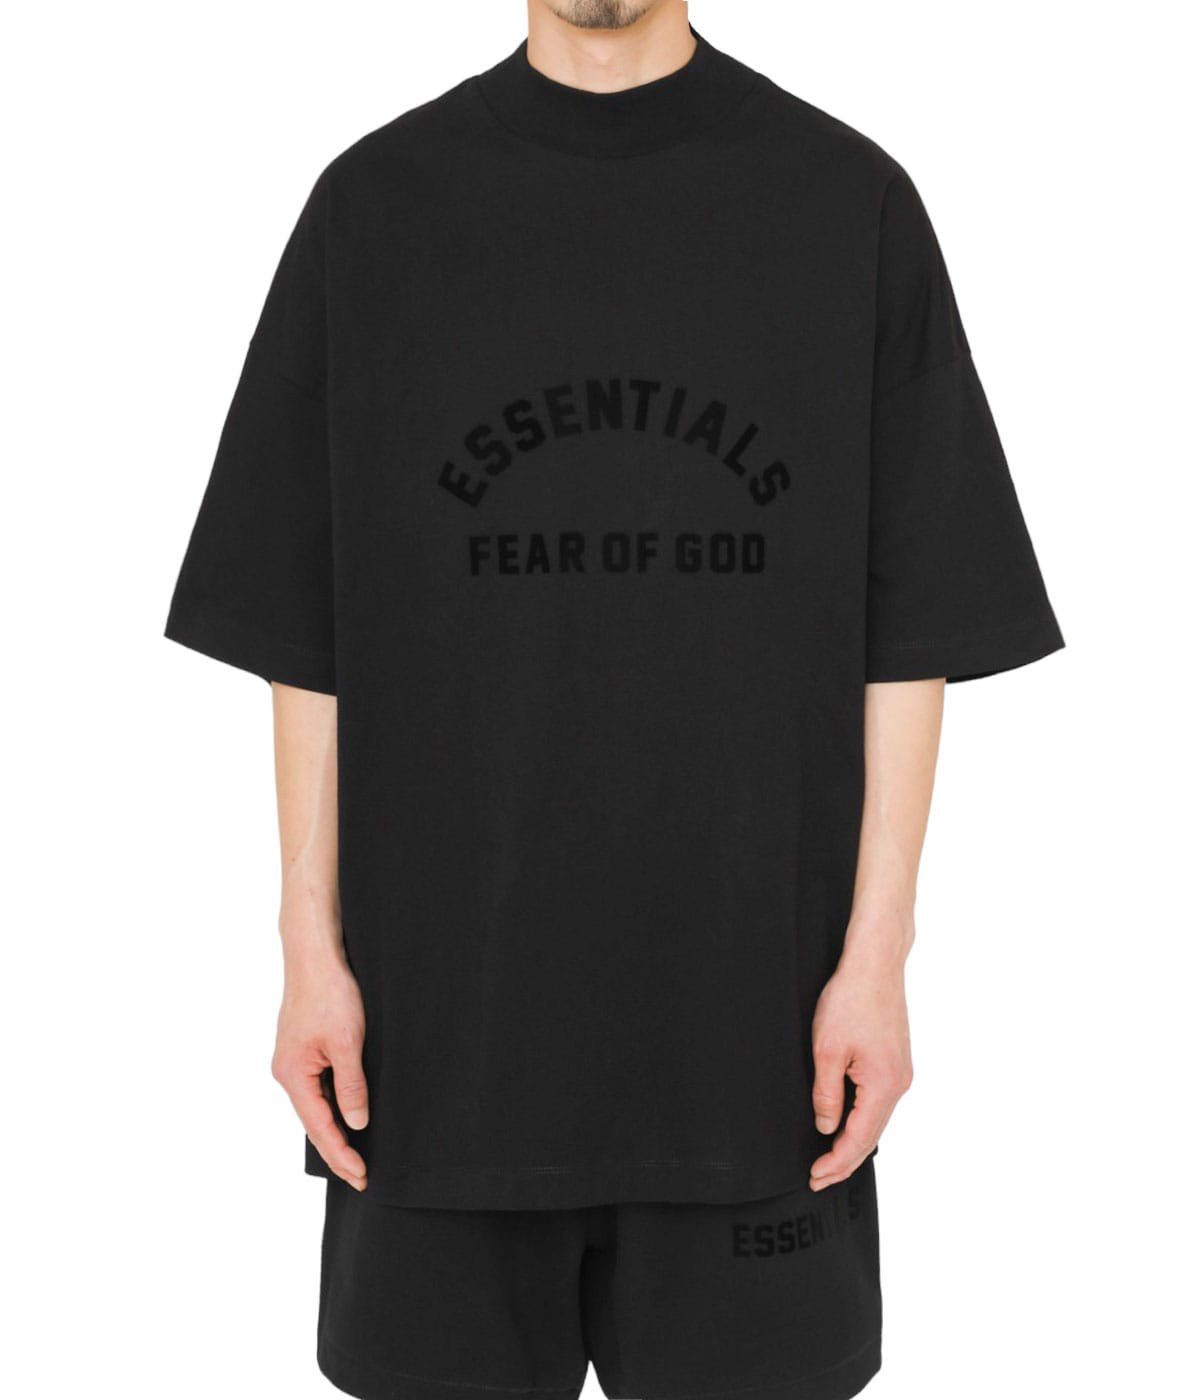 Essentials Tee | ESSENTIALS FEAR OF GOD(エッセンシャルズ フィア